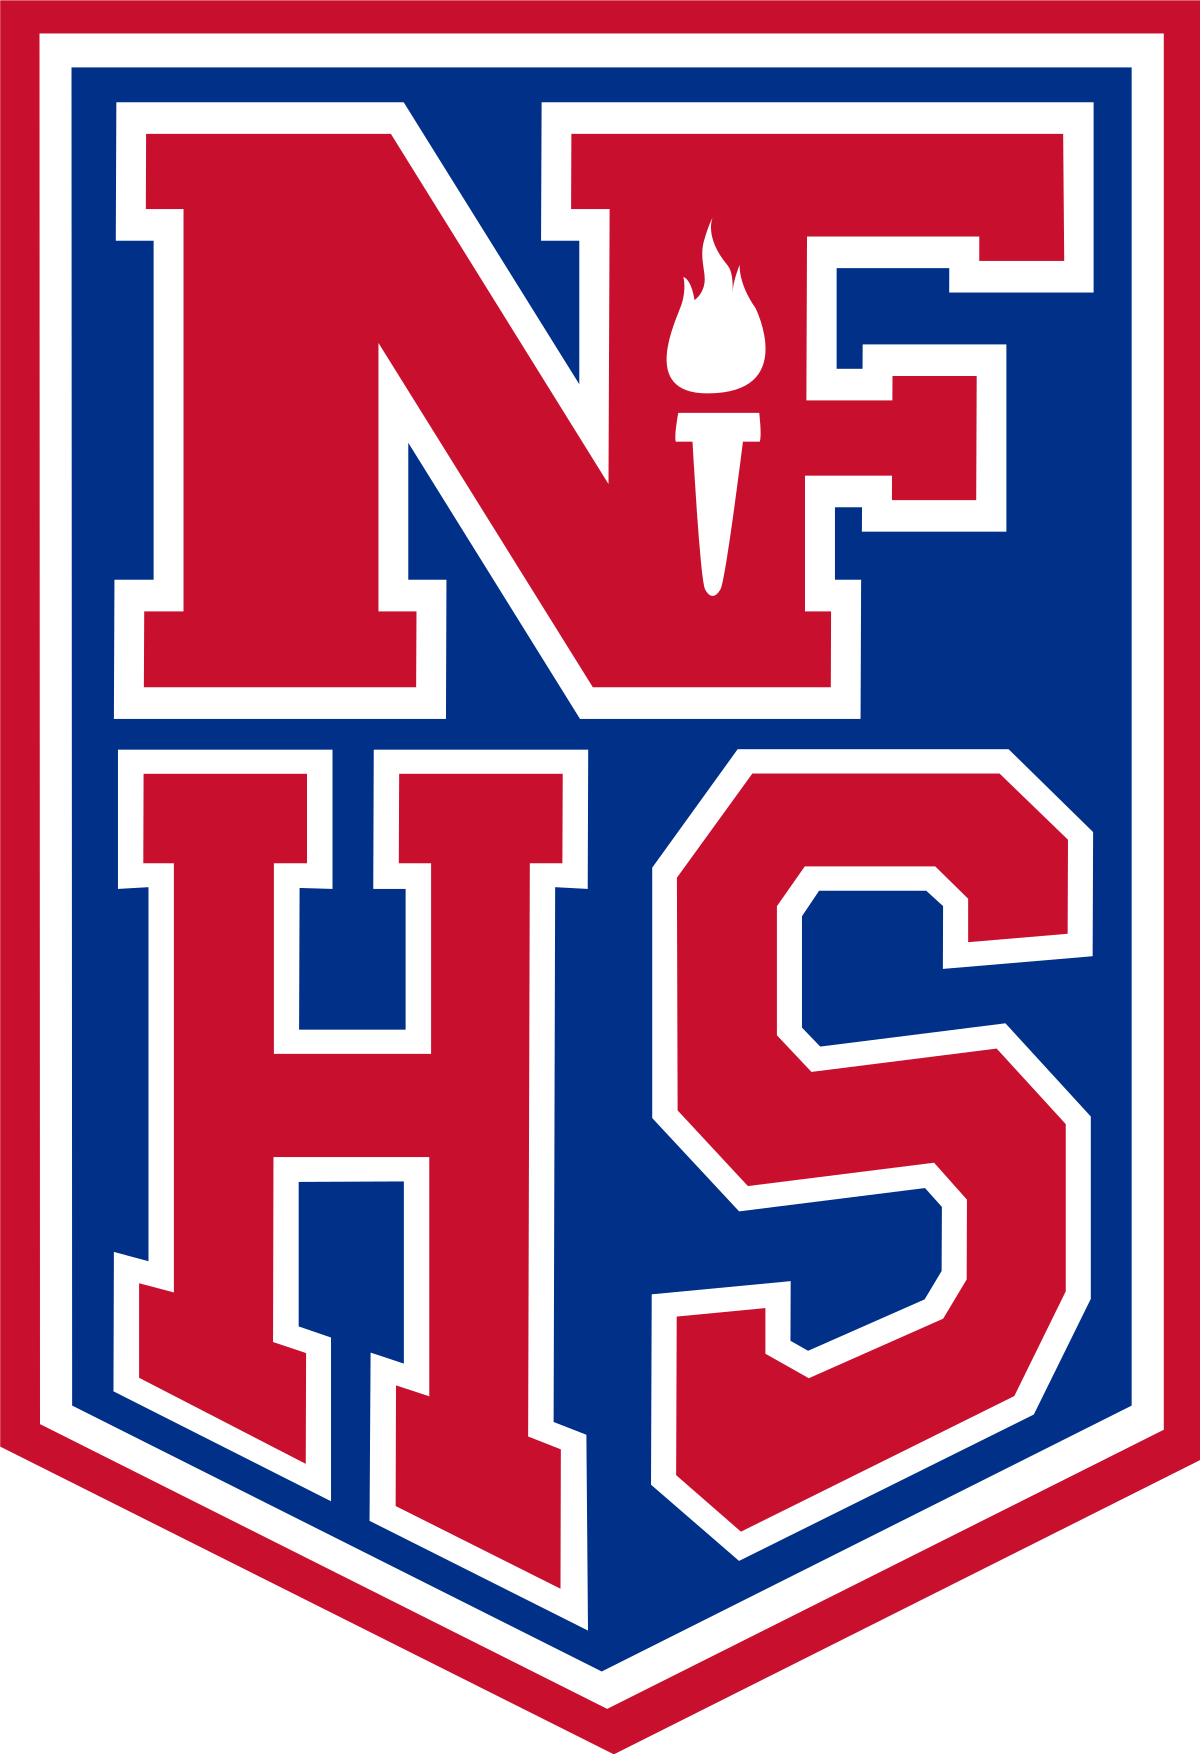 NFHS logo large